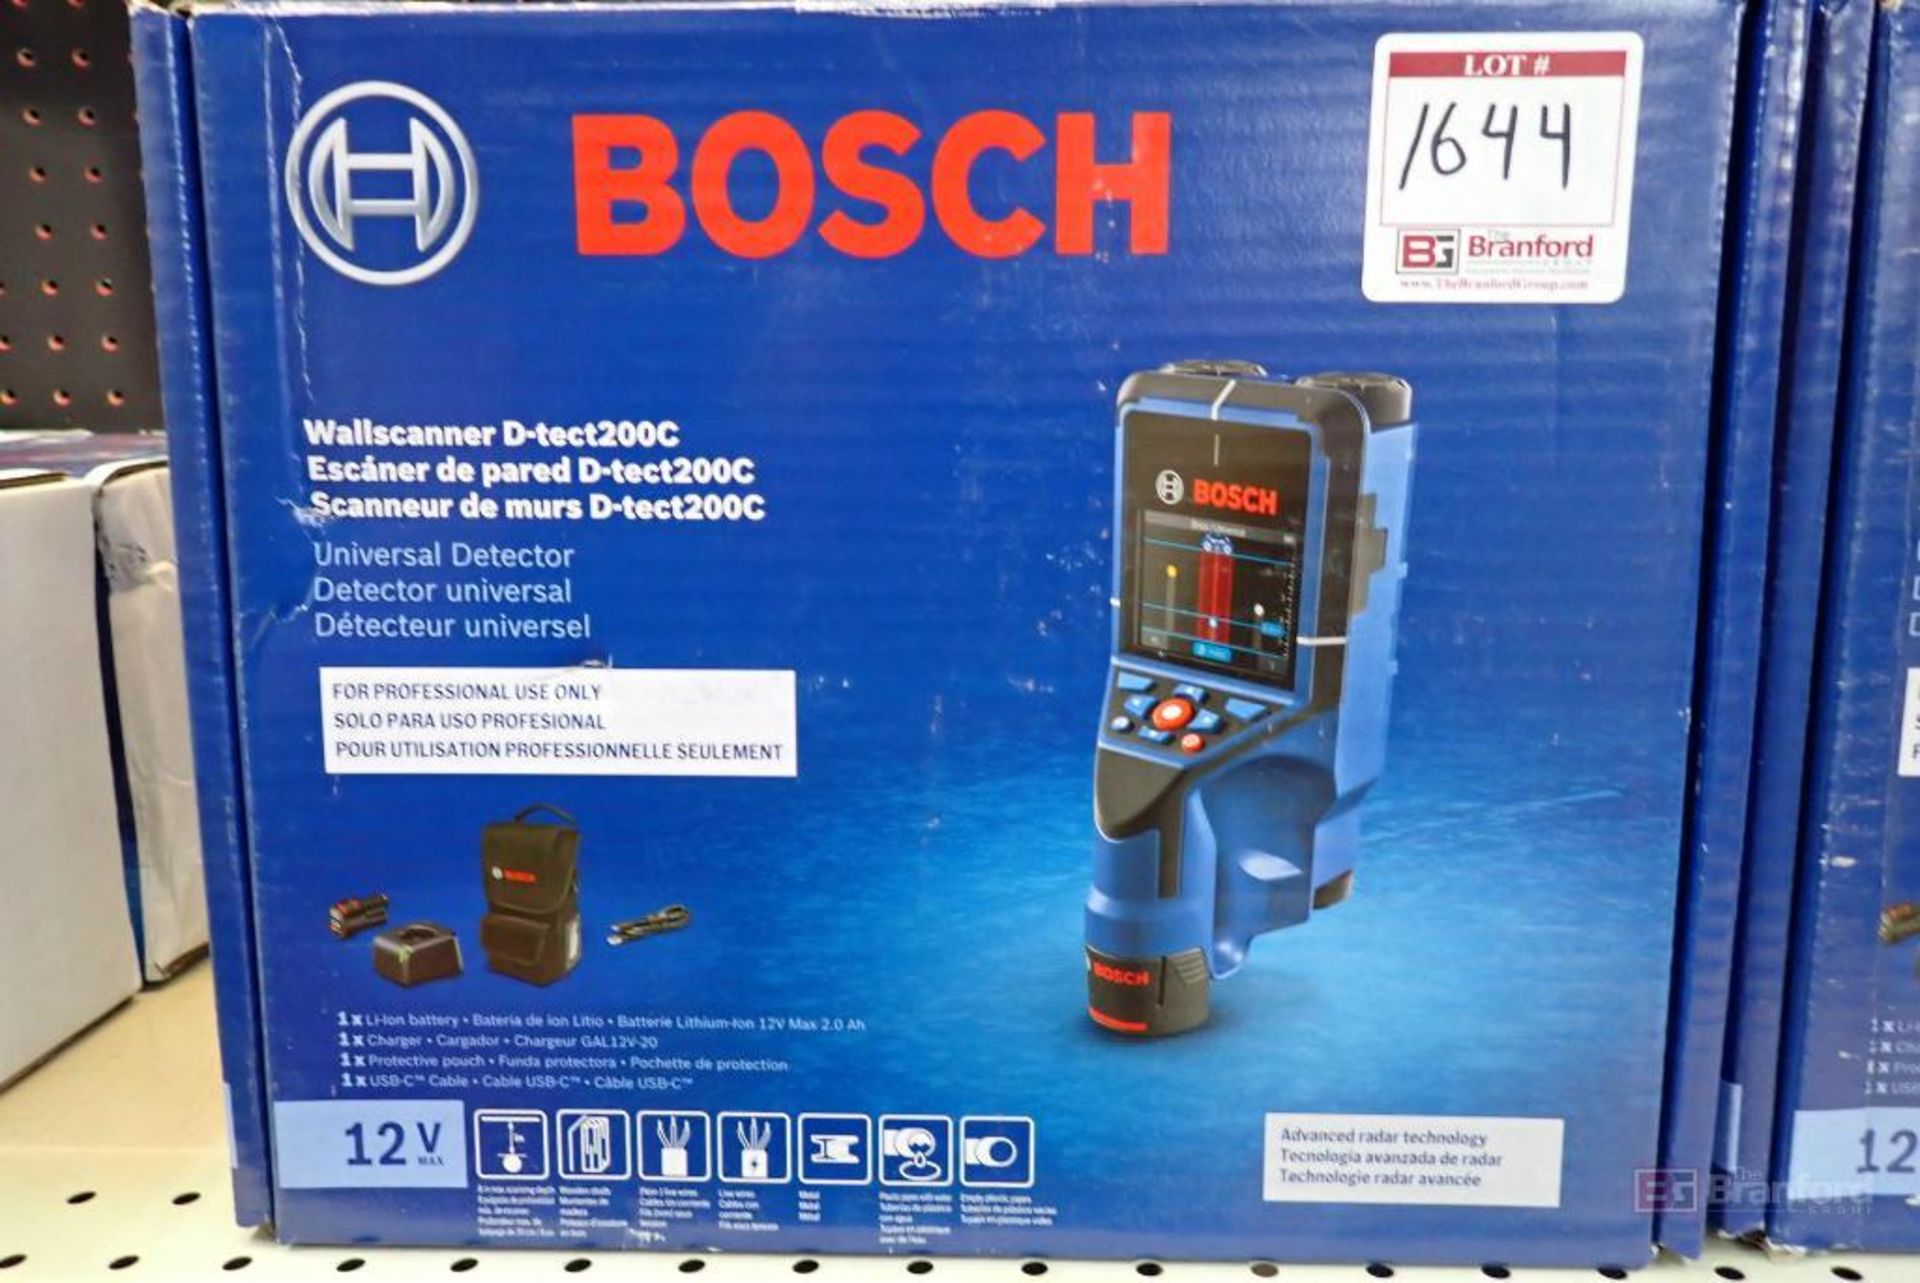 Bosch D-tect200C Wallscanner Kit - Image 2 of 5